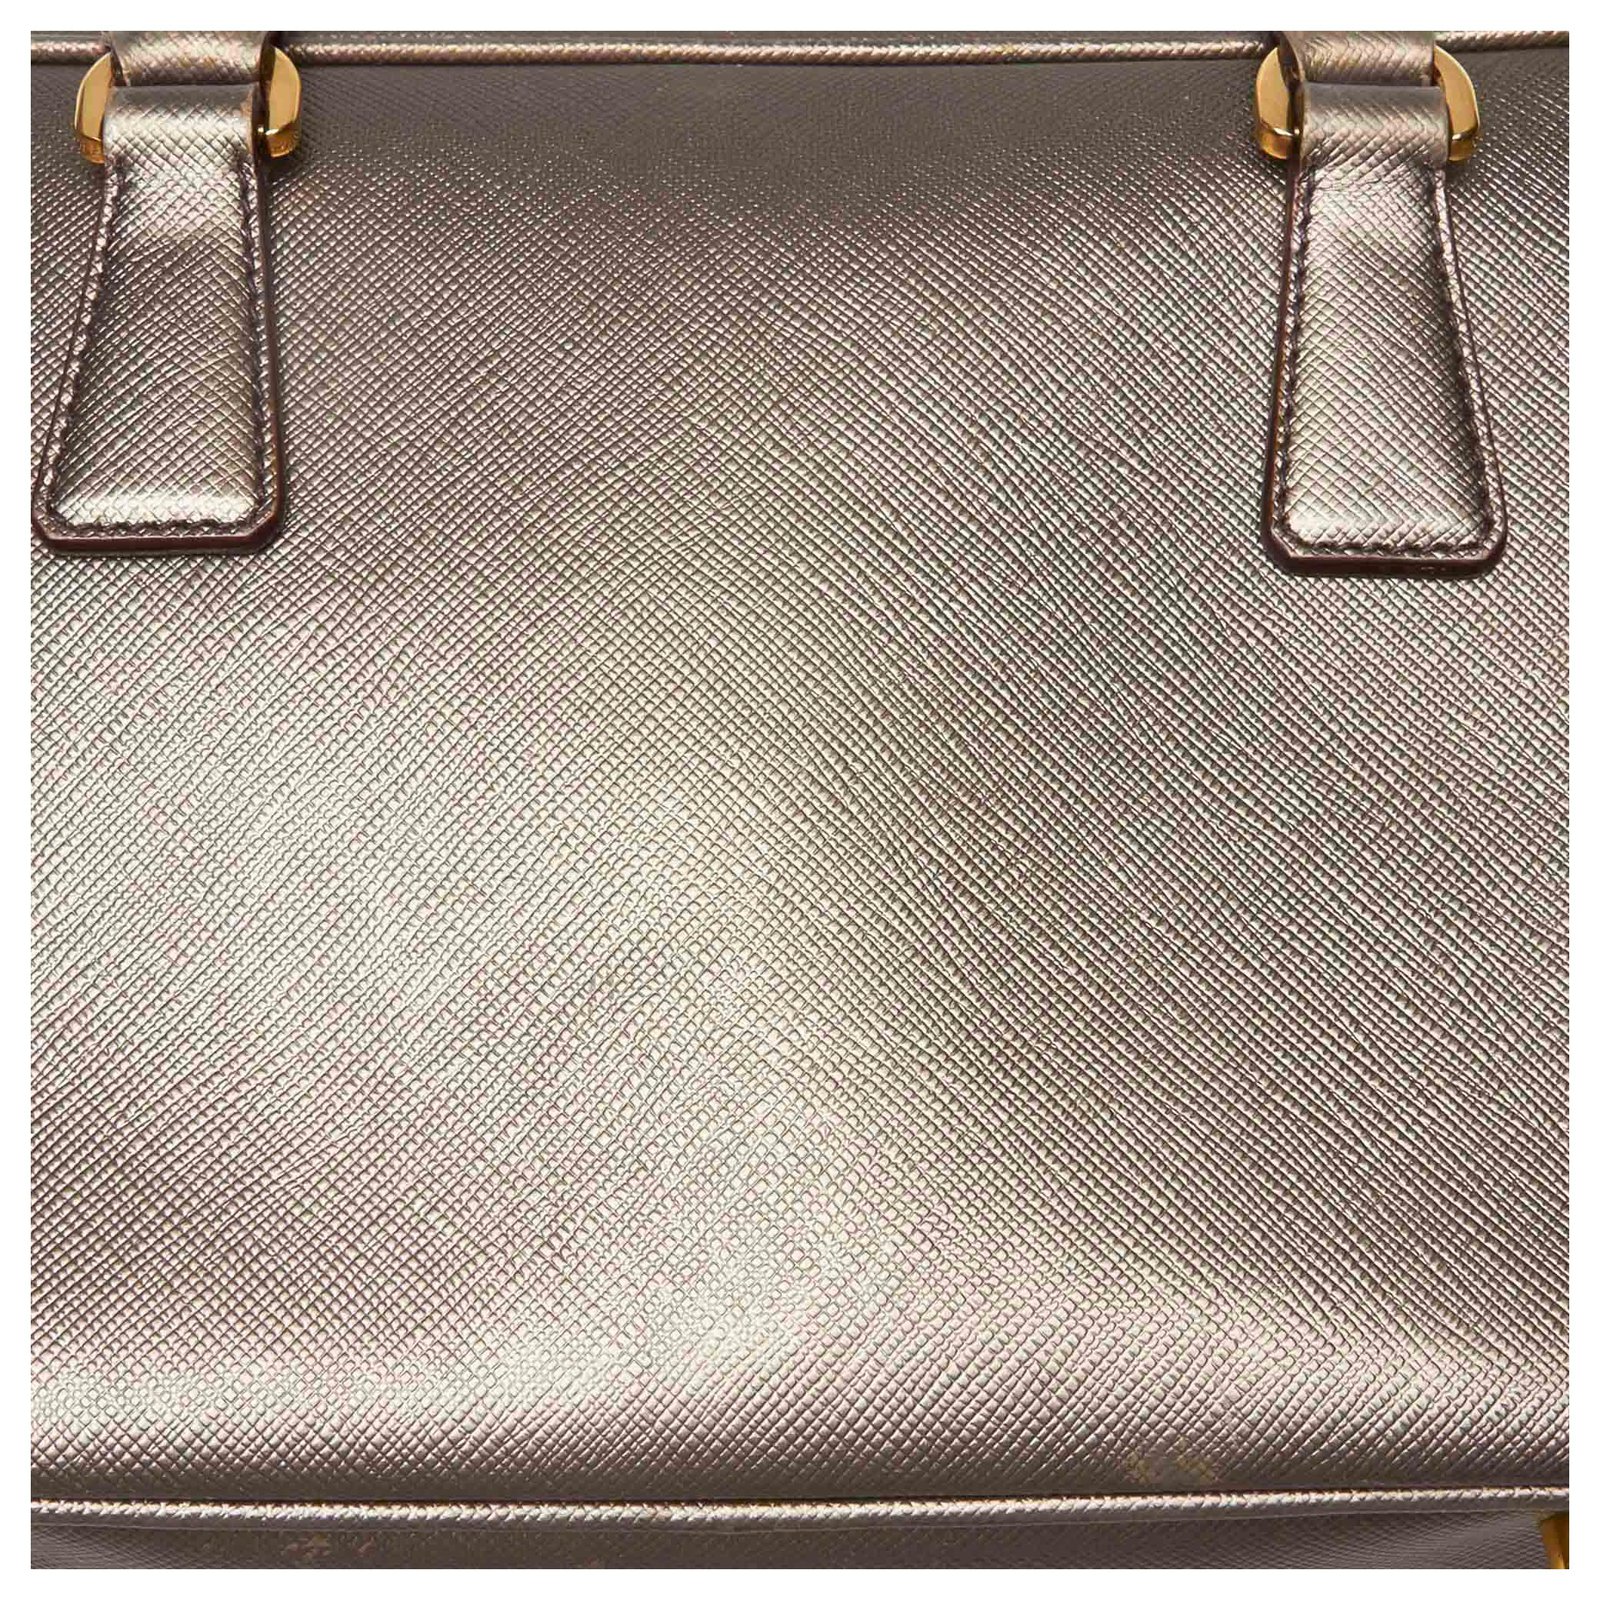 Prada Bauletto Saffiano Leather Medium Ghw (Marble Grey) – ValiseLaBel